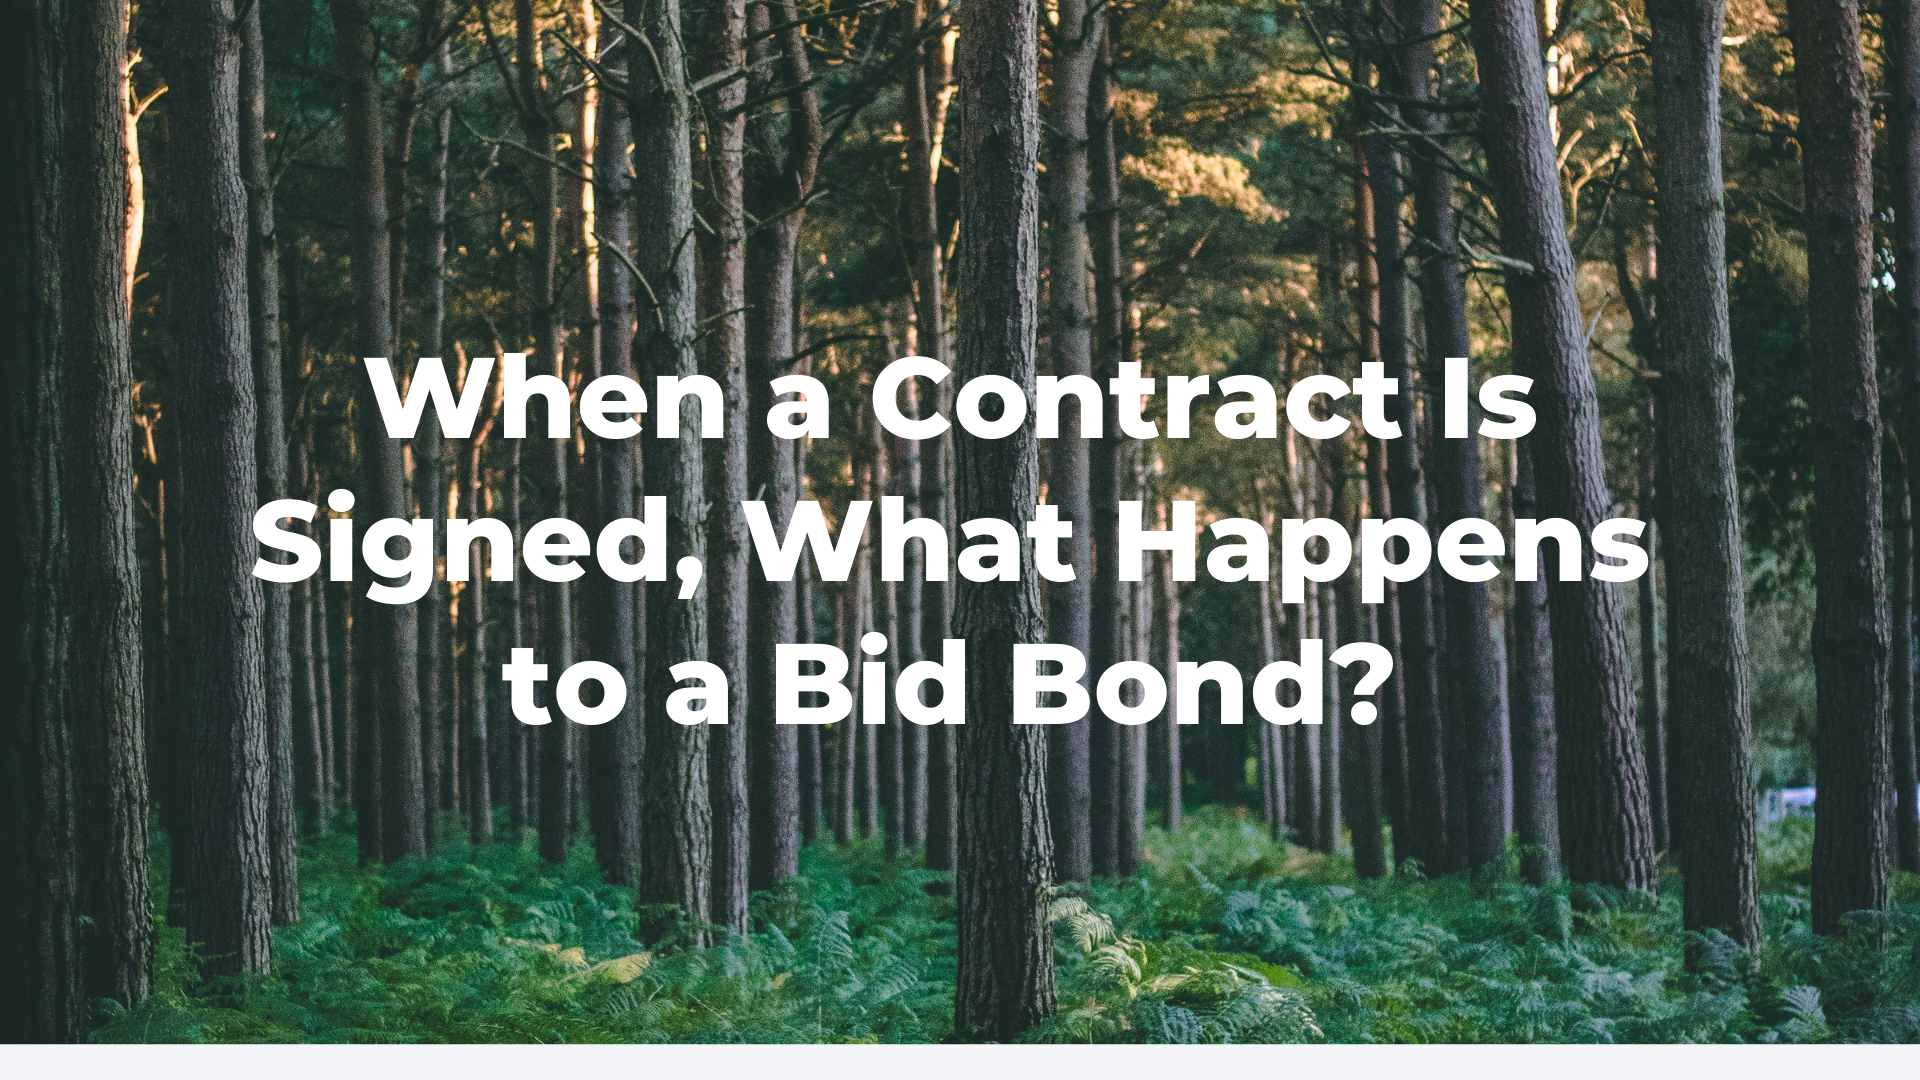 bid bond - contracts and bid bonds - forest